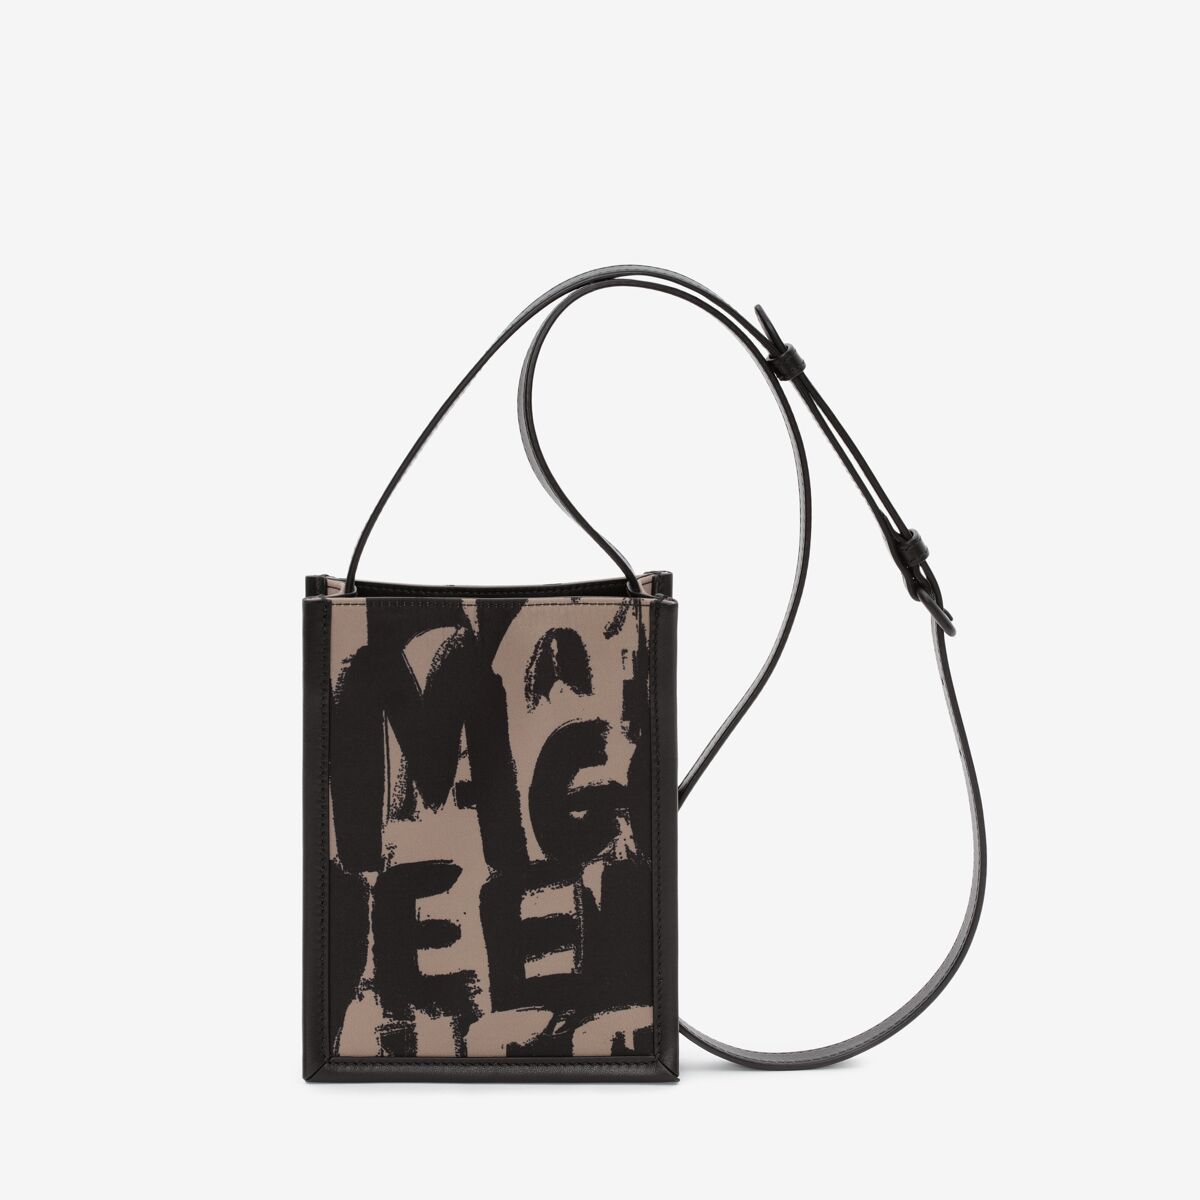 ALEXANDER MCQUEEN McQueen Graffiti Edge Mini Crossbody Bag